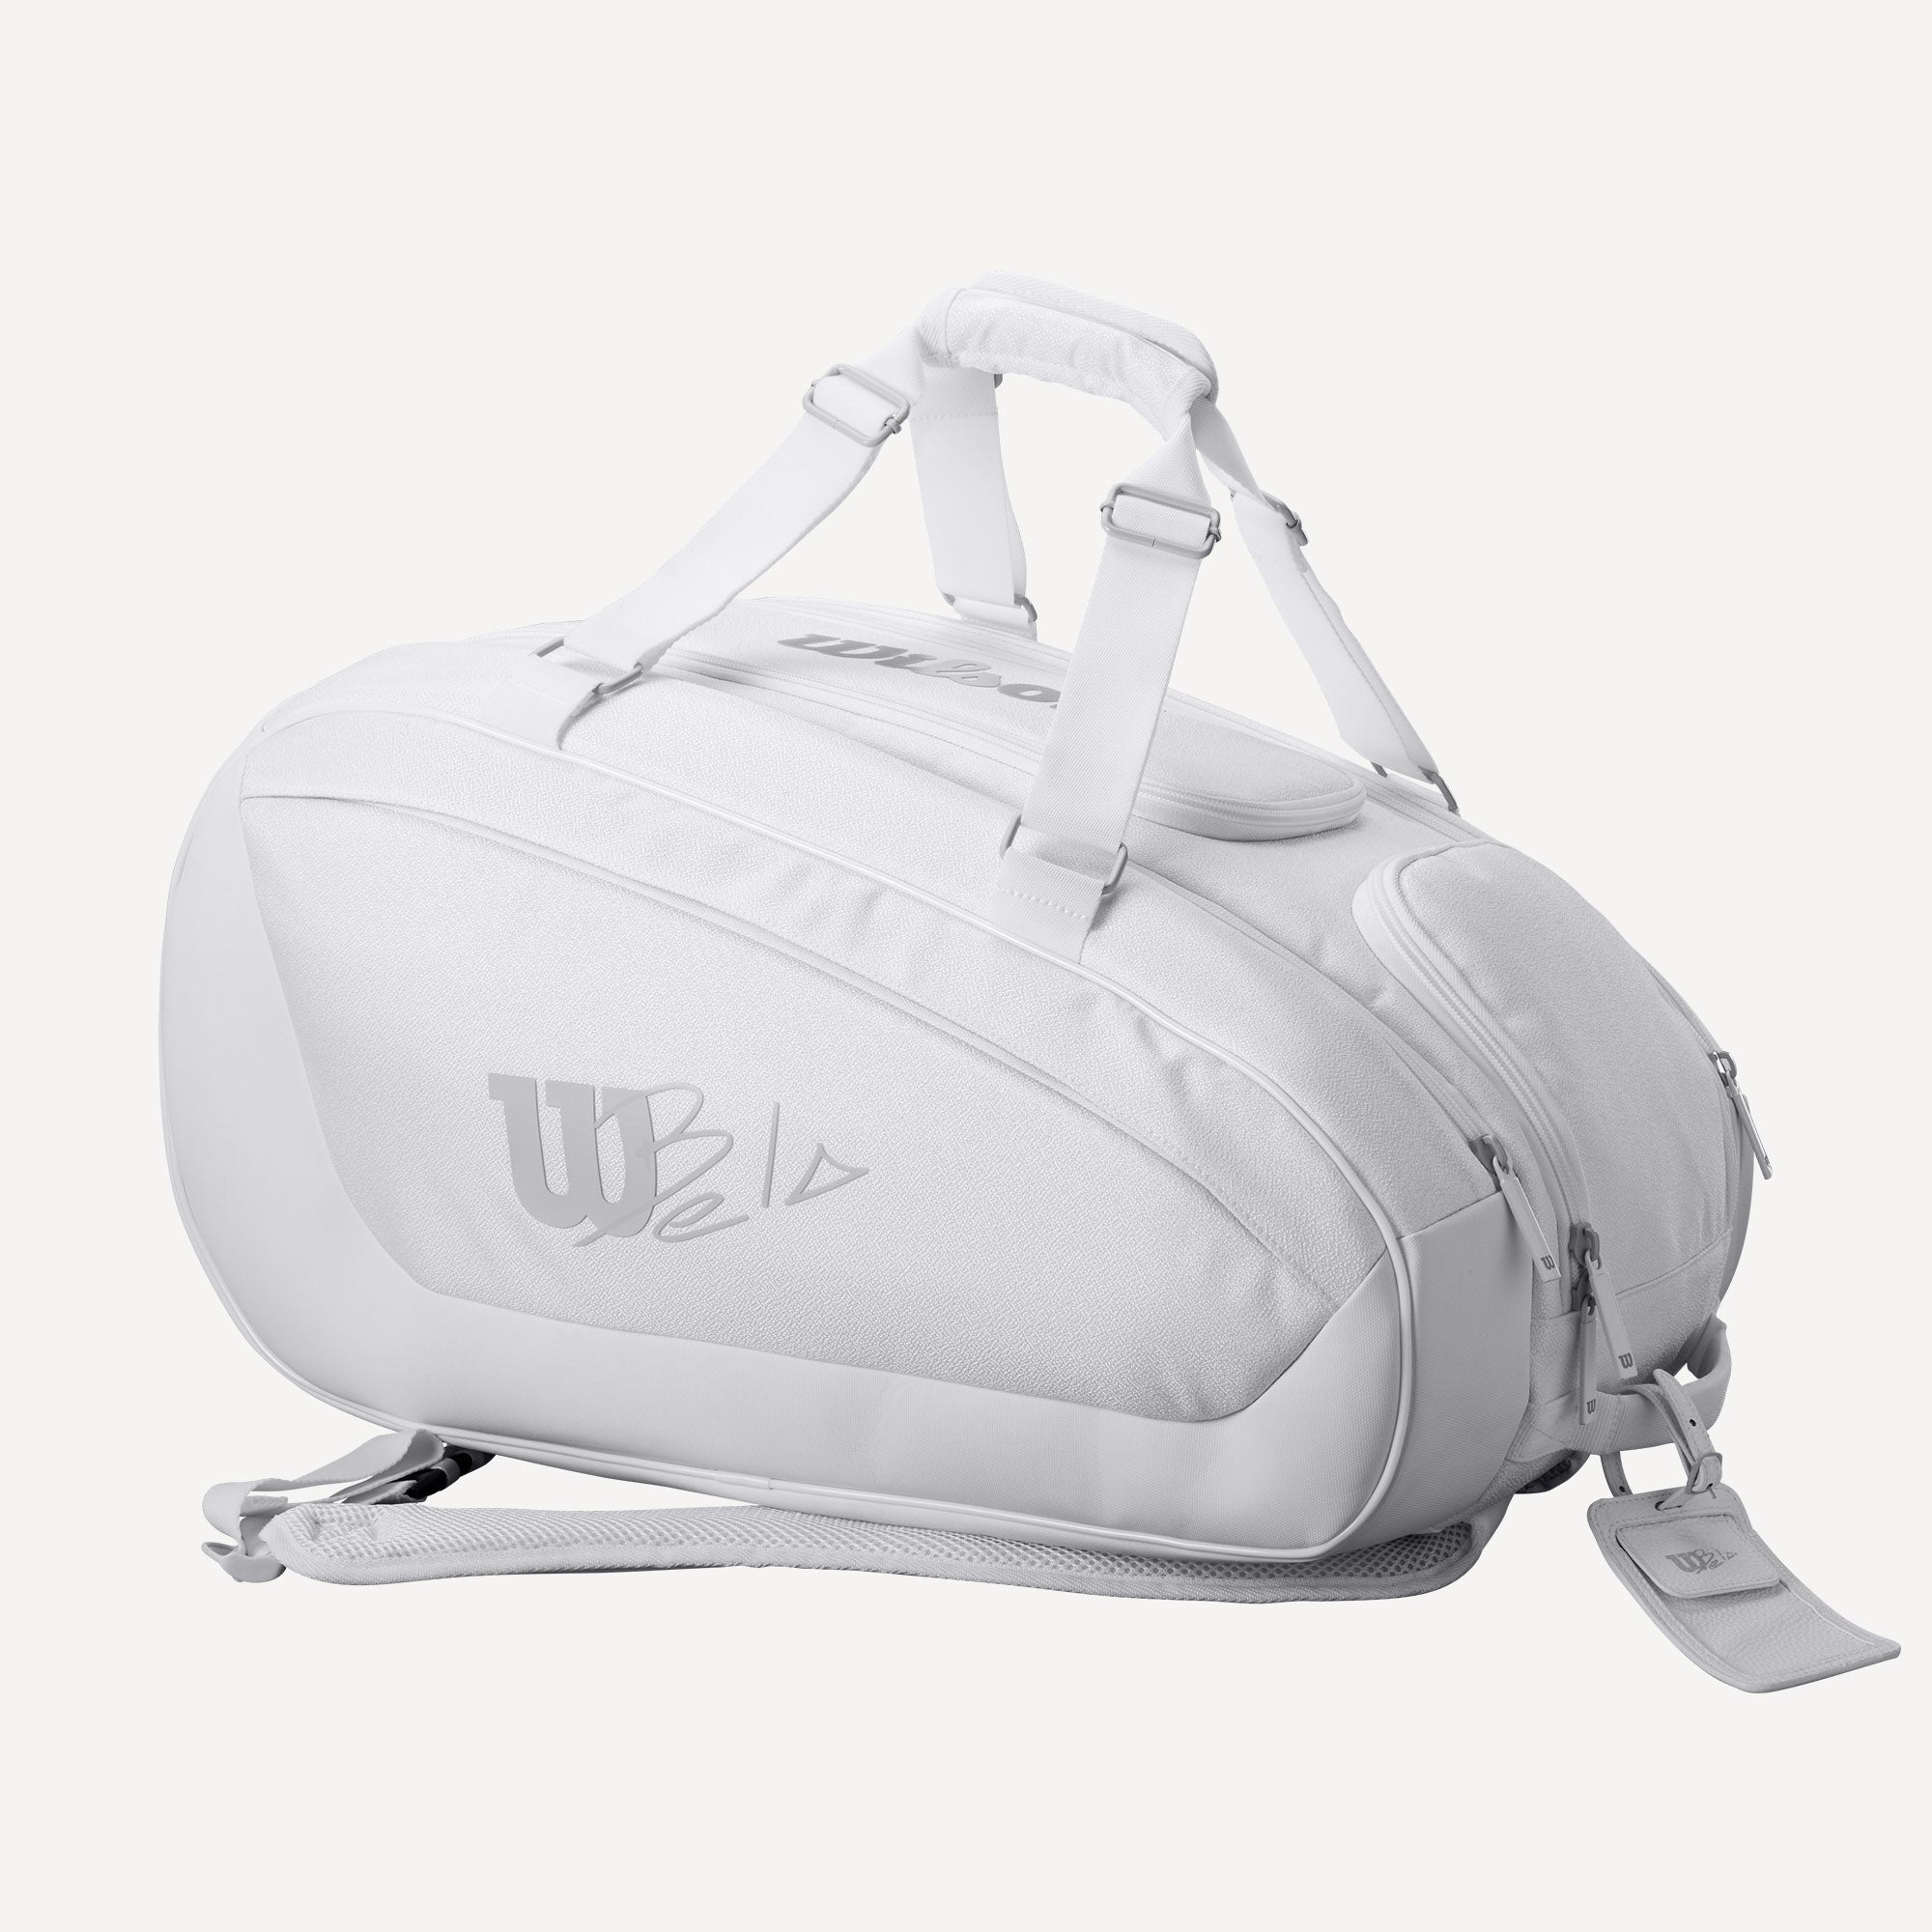 Wilson BELA Super Tour Padel Bag - White (1)